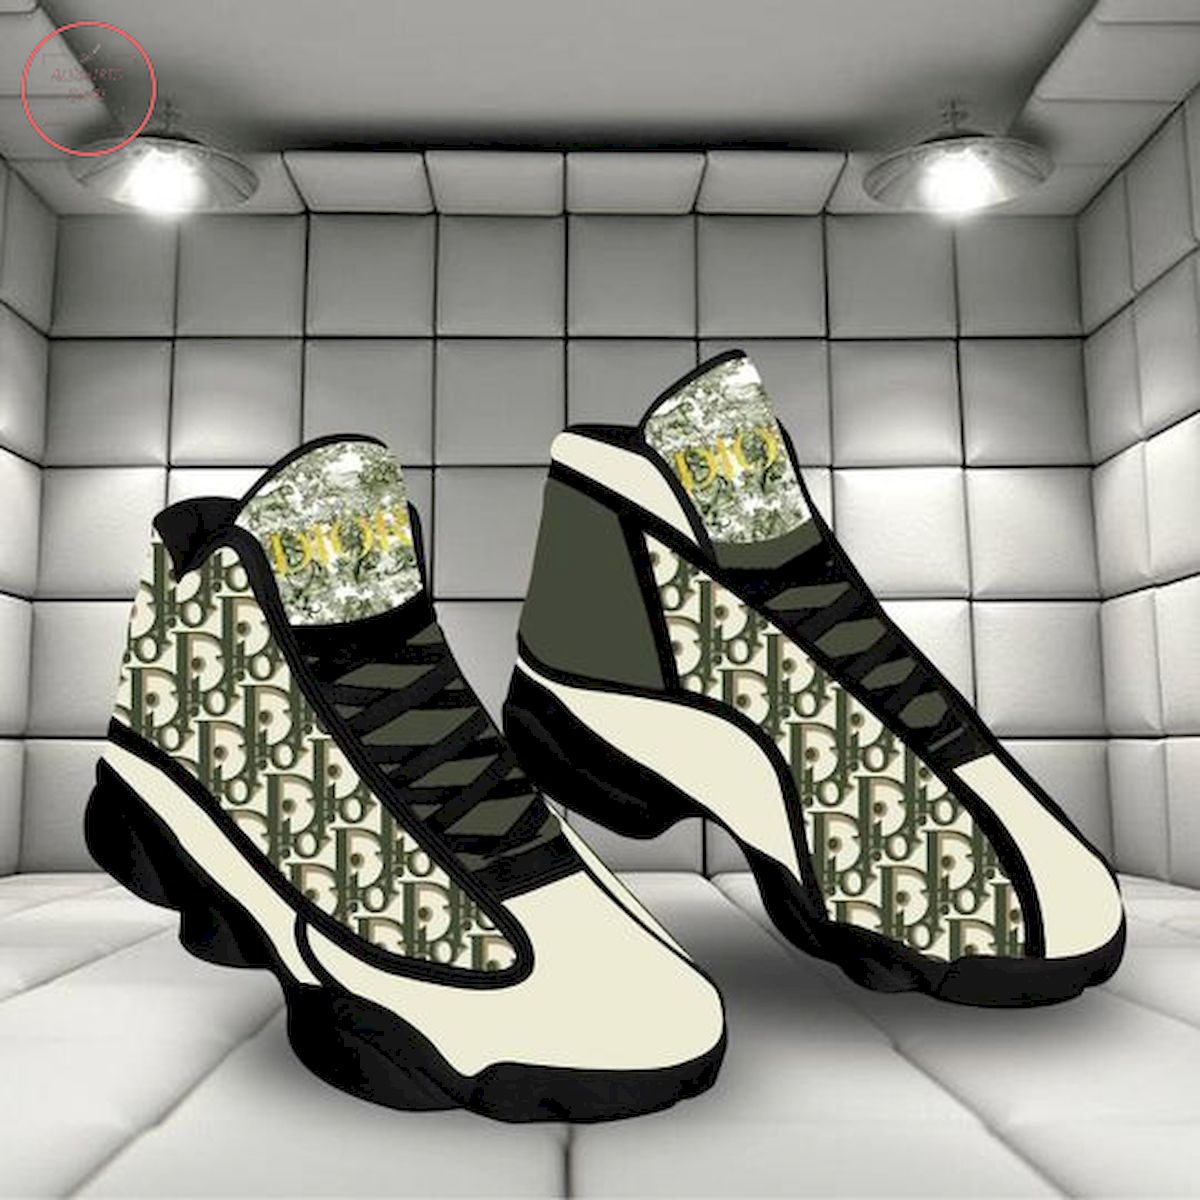 Dior Paris Luxury Air Jordan 13 Sneaker Shoes